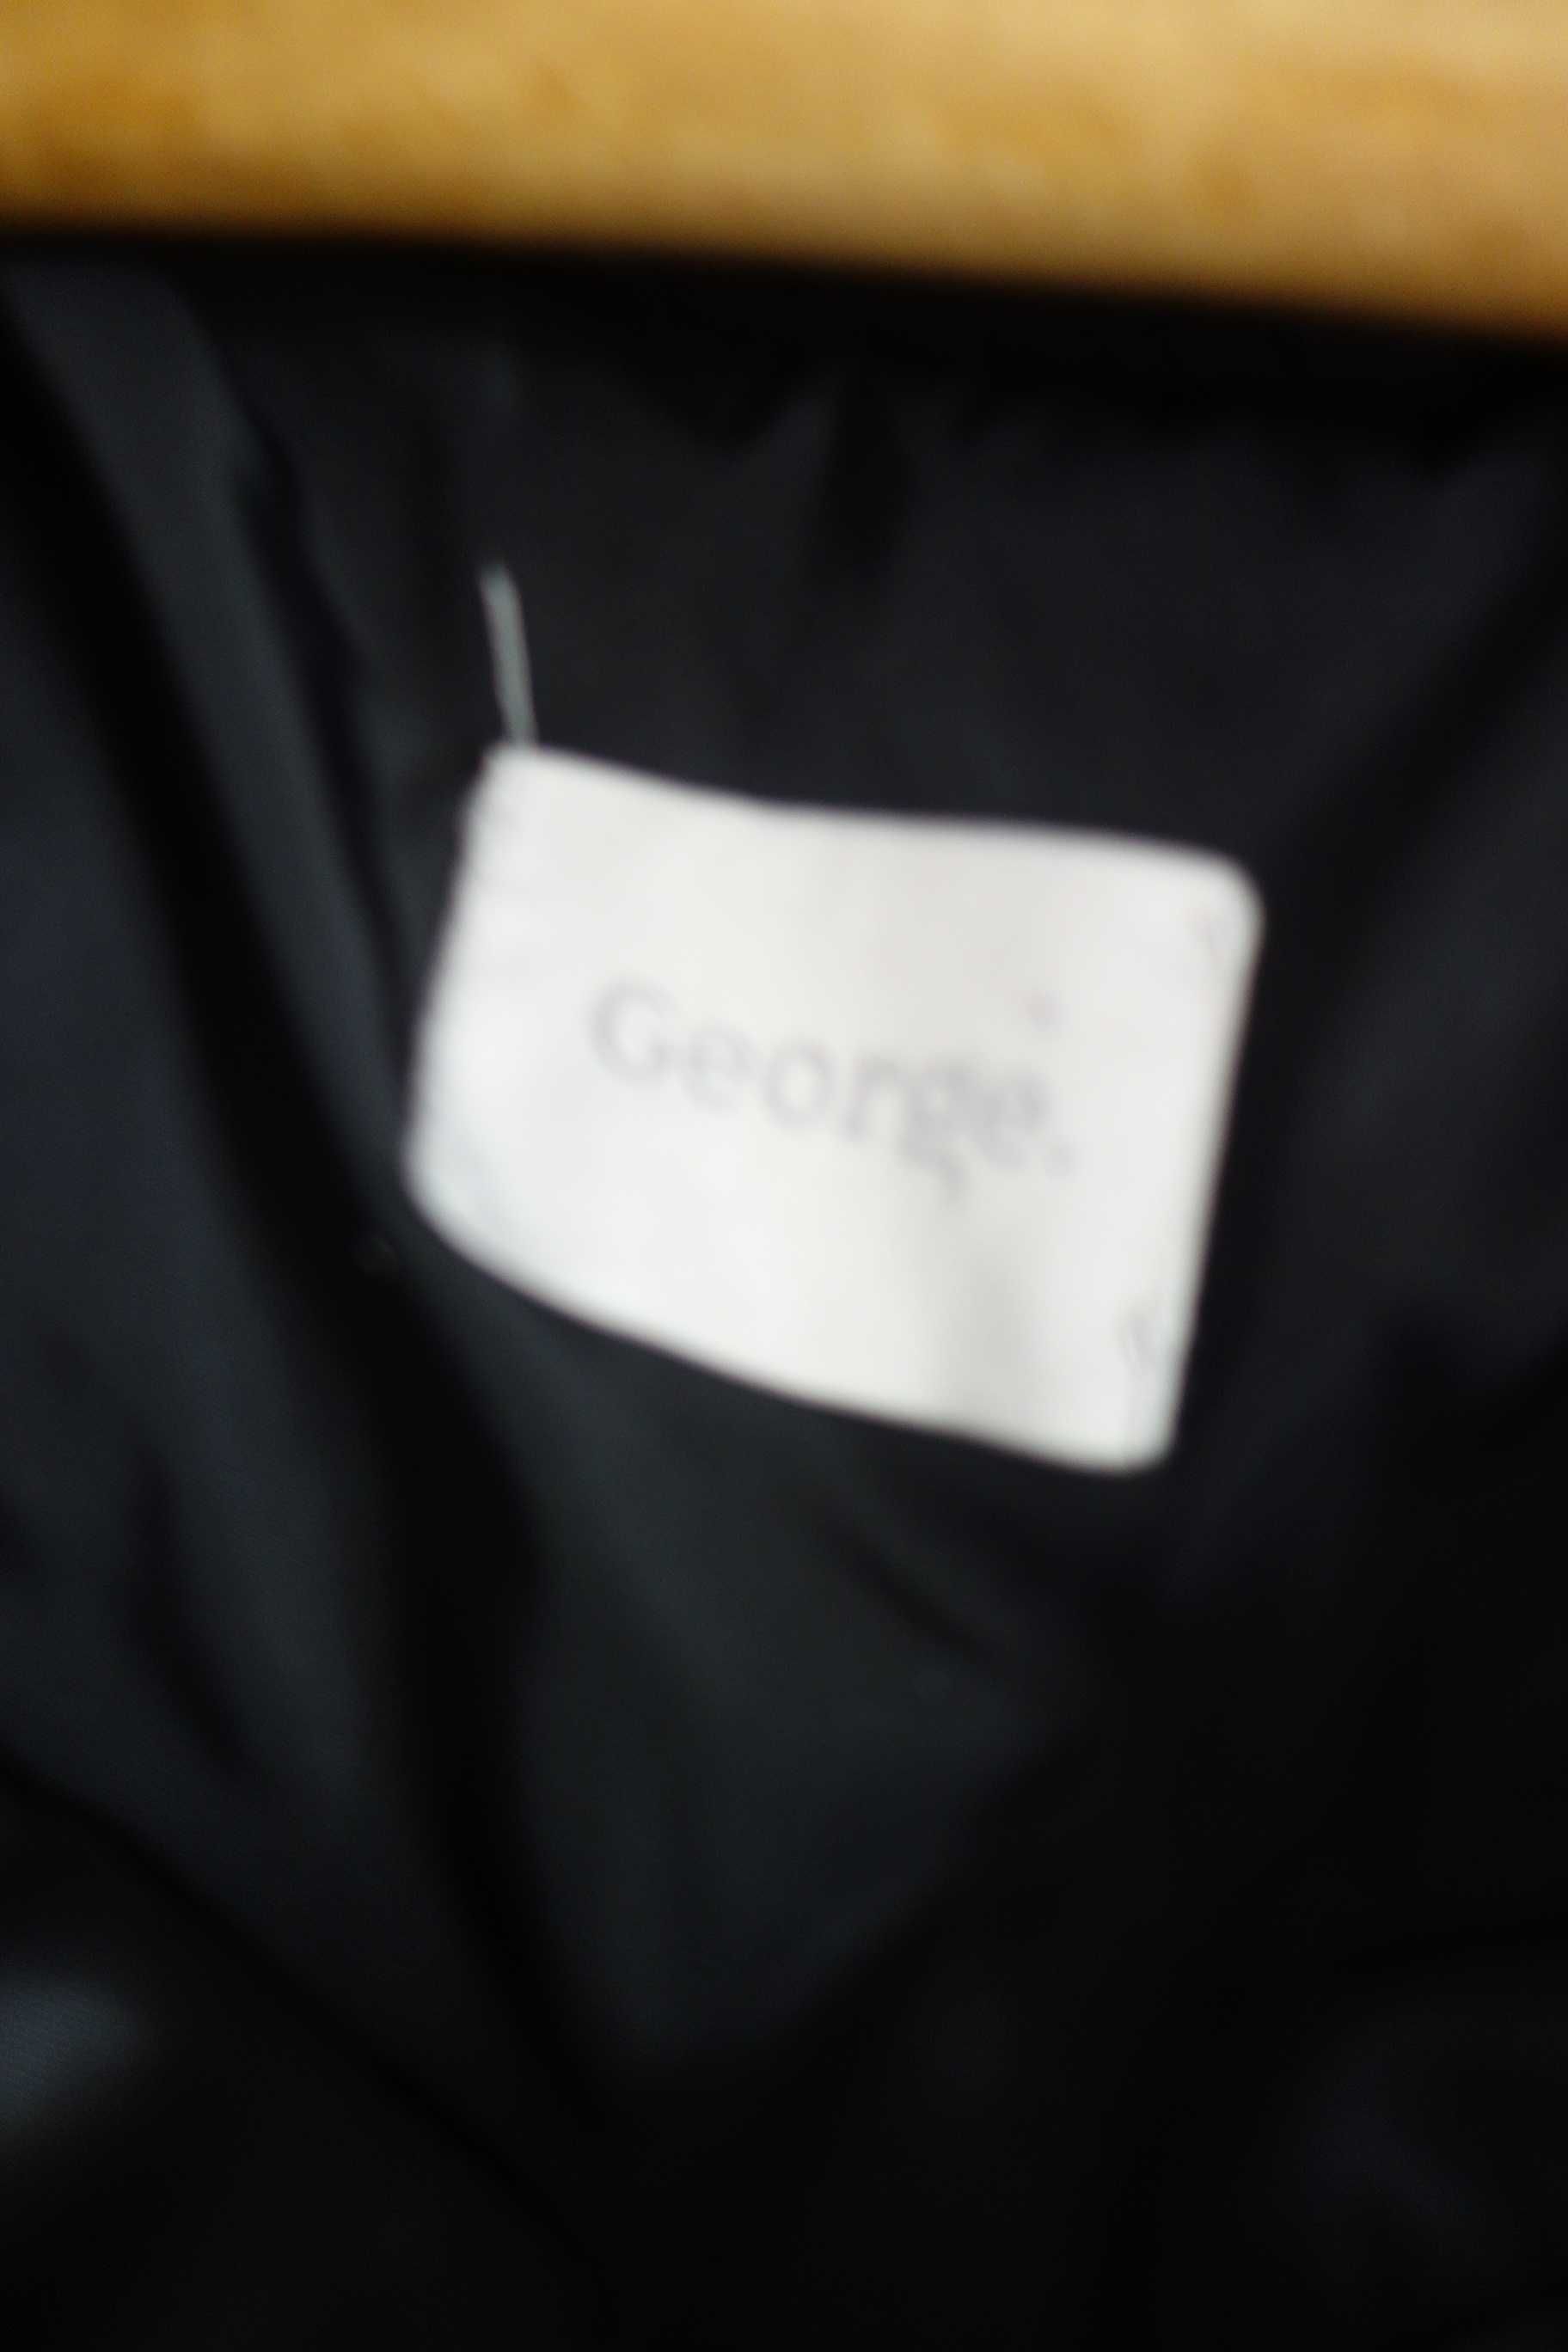 George damska kurtka pikowana czarna ciepła kaptur futerko